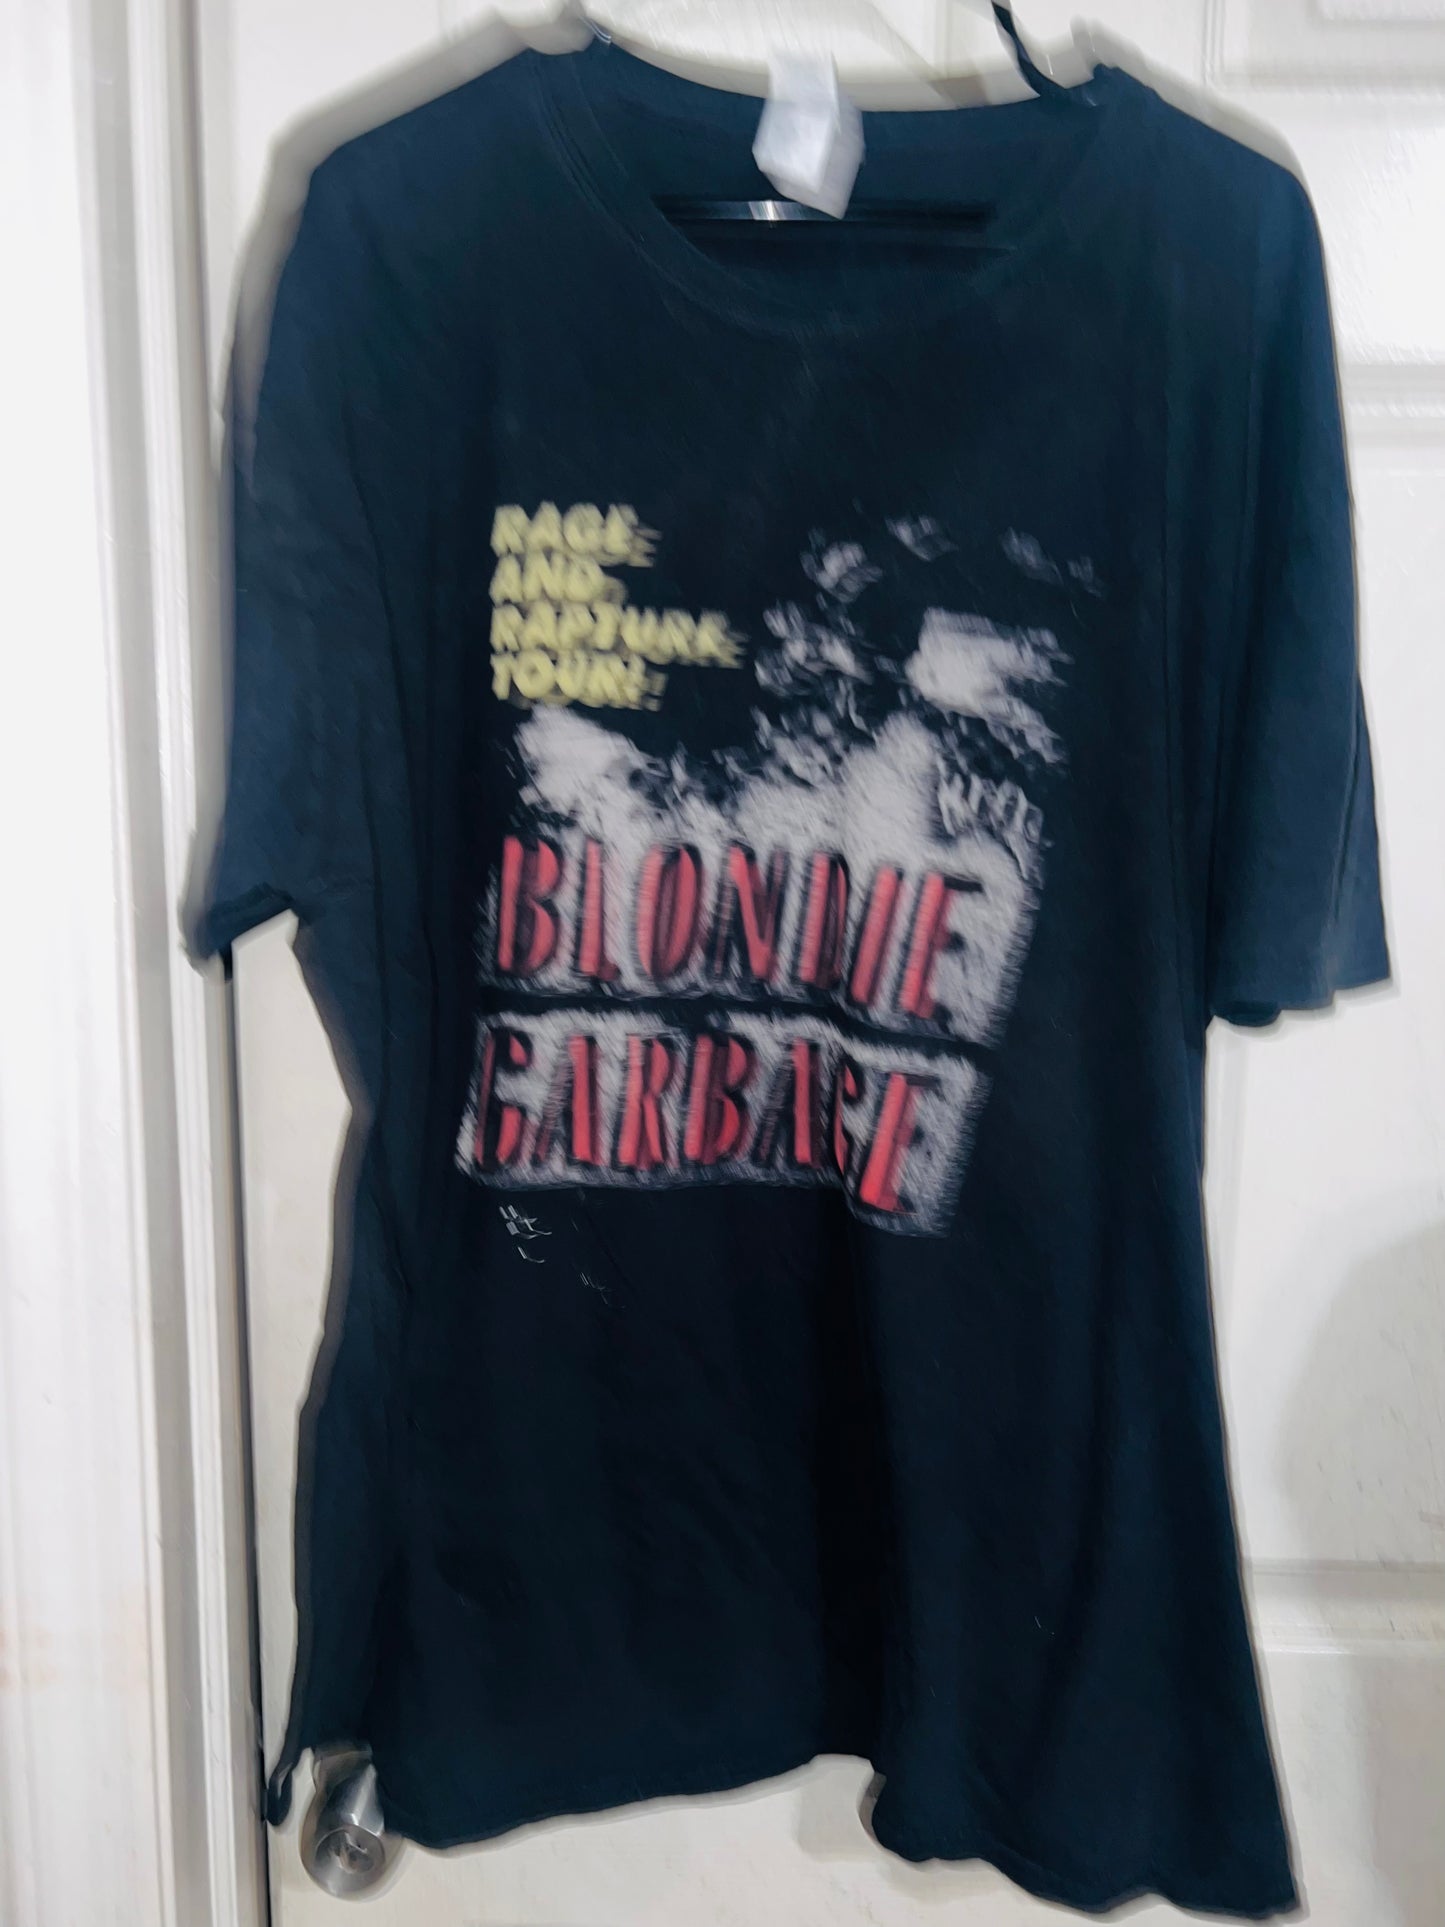 Blondie & Garbage Vintage Tour Double Sided Tee